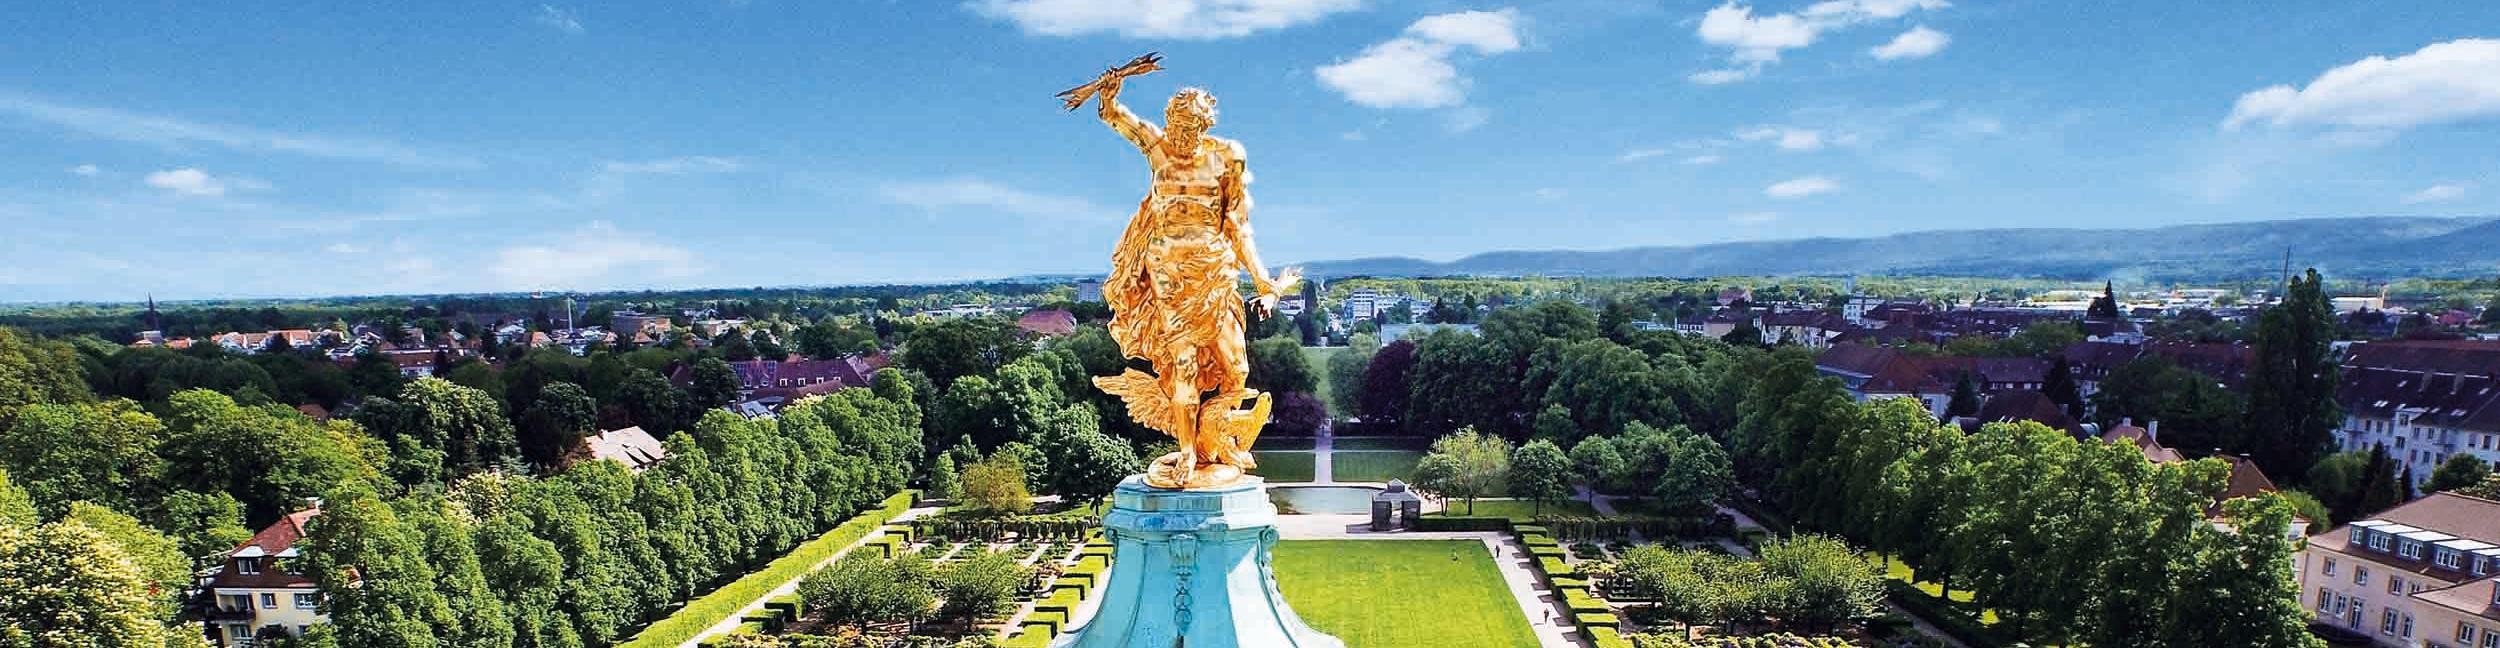 Golden man at Rastatt Castle